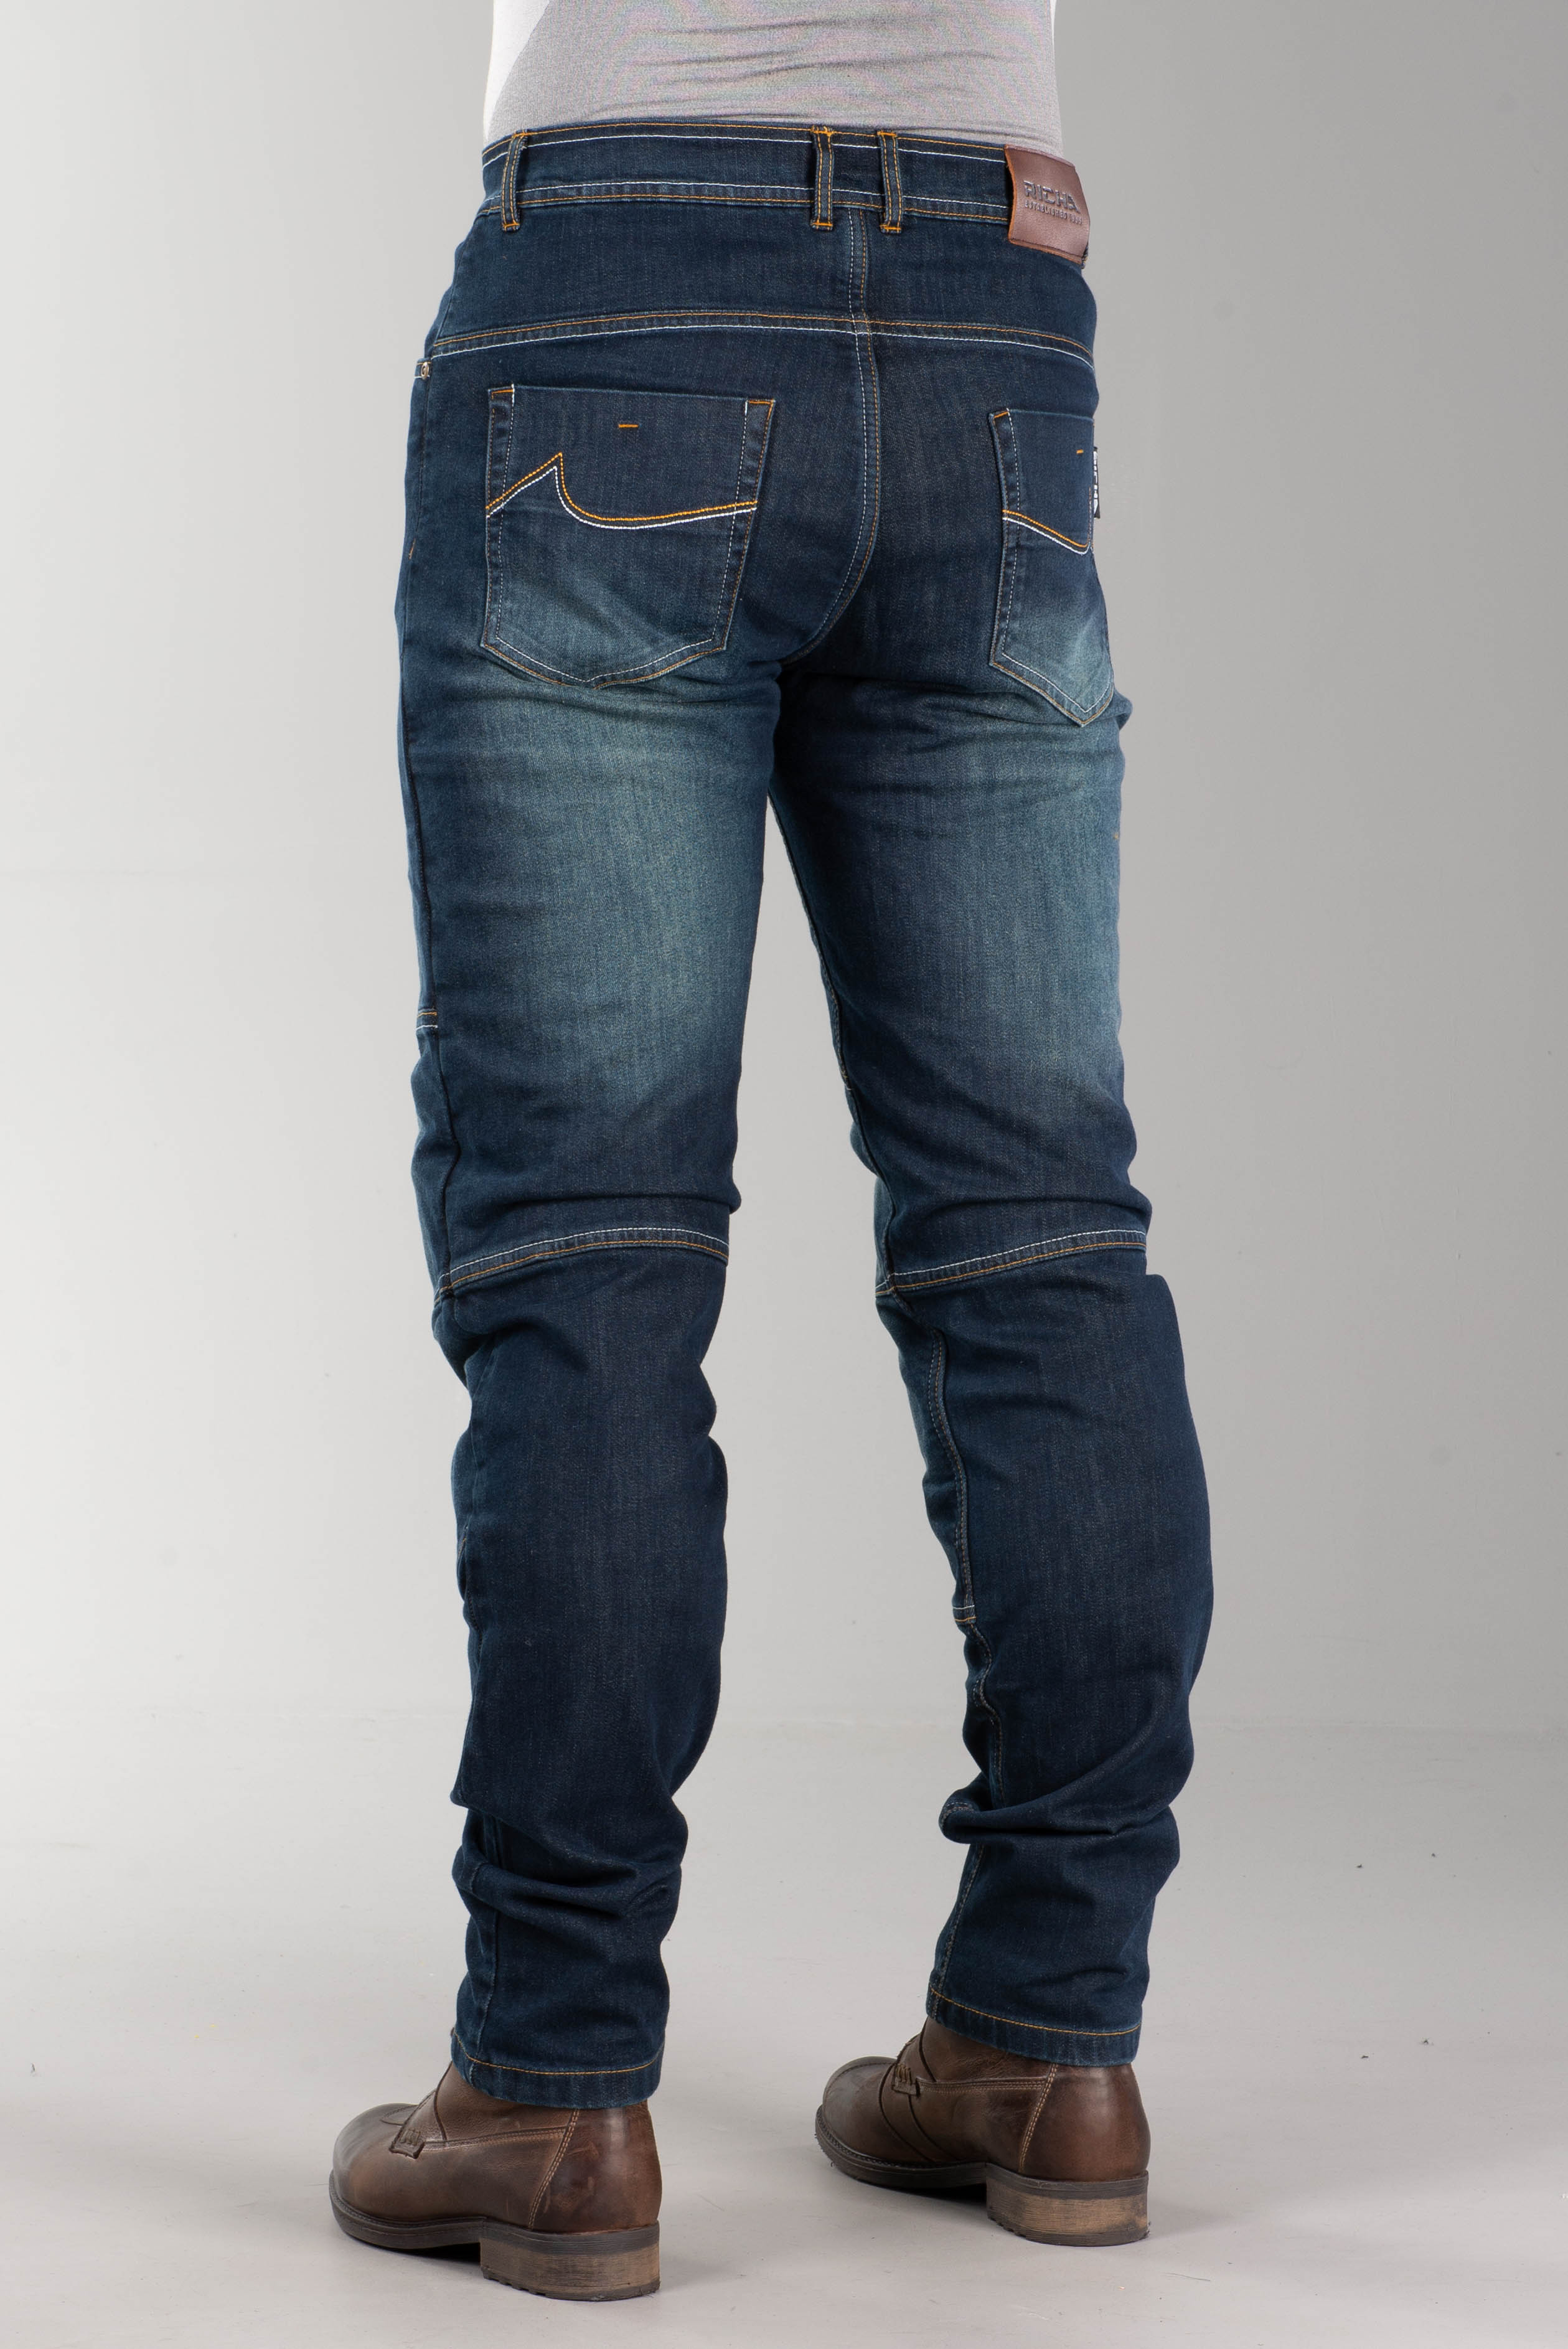 mc kevlar jeans